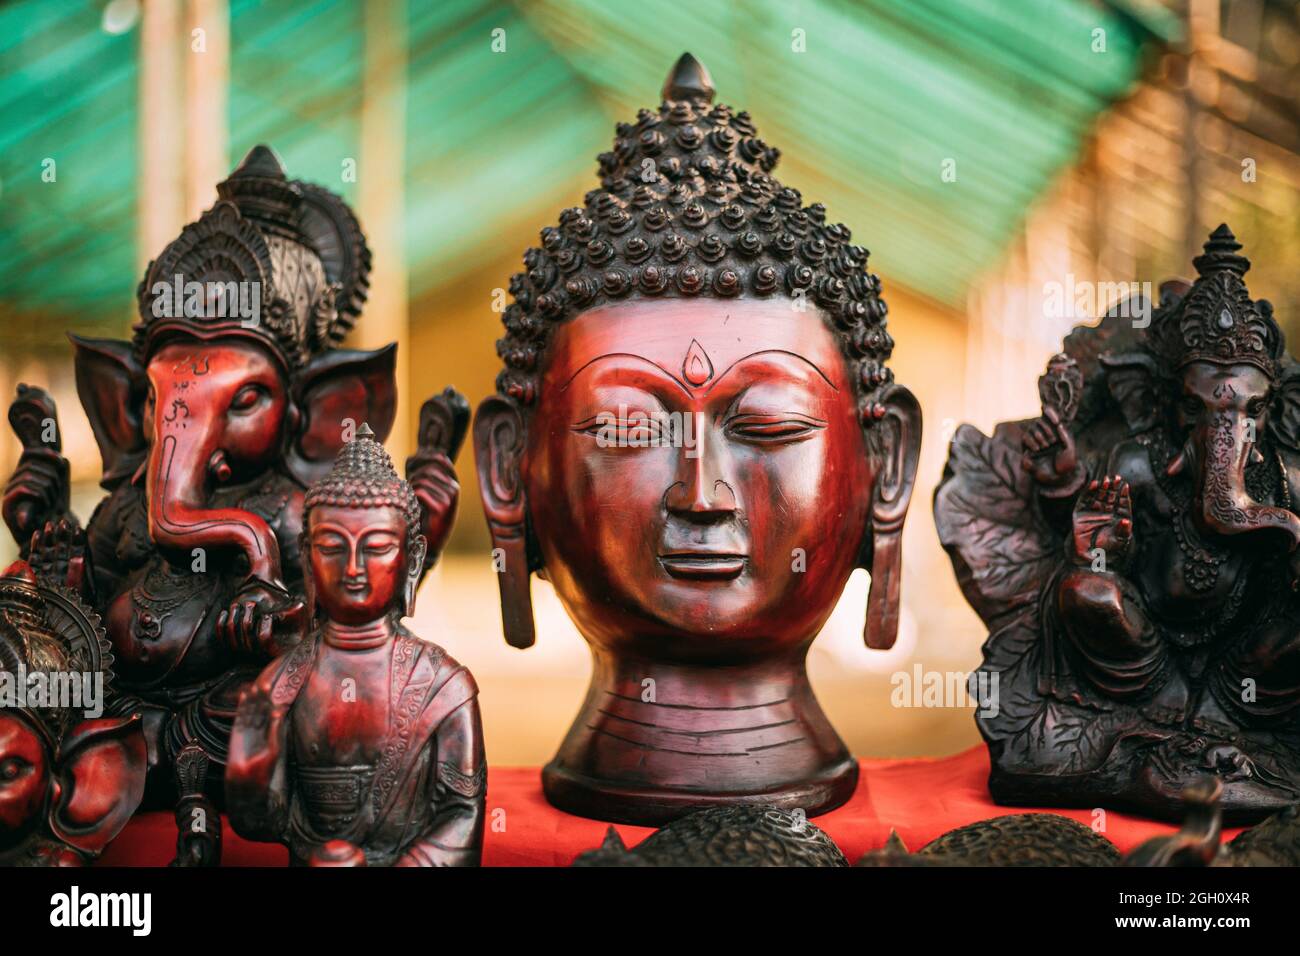 hi-res images souvenir photography - Alamy and stock Buddha